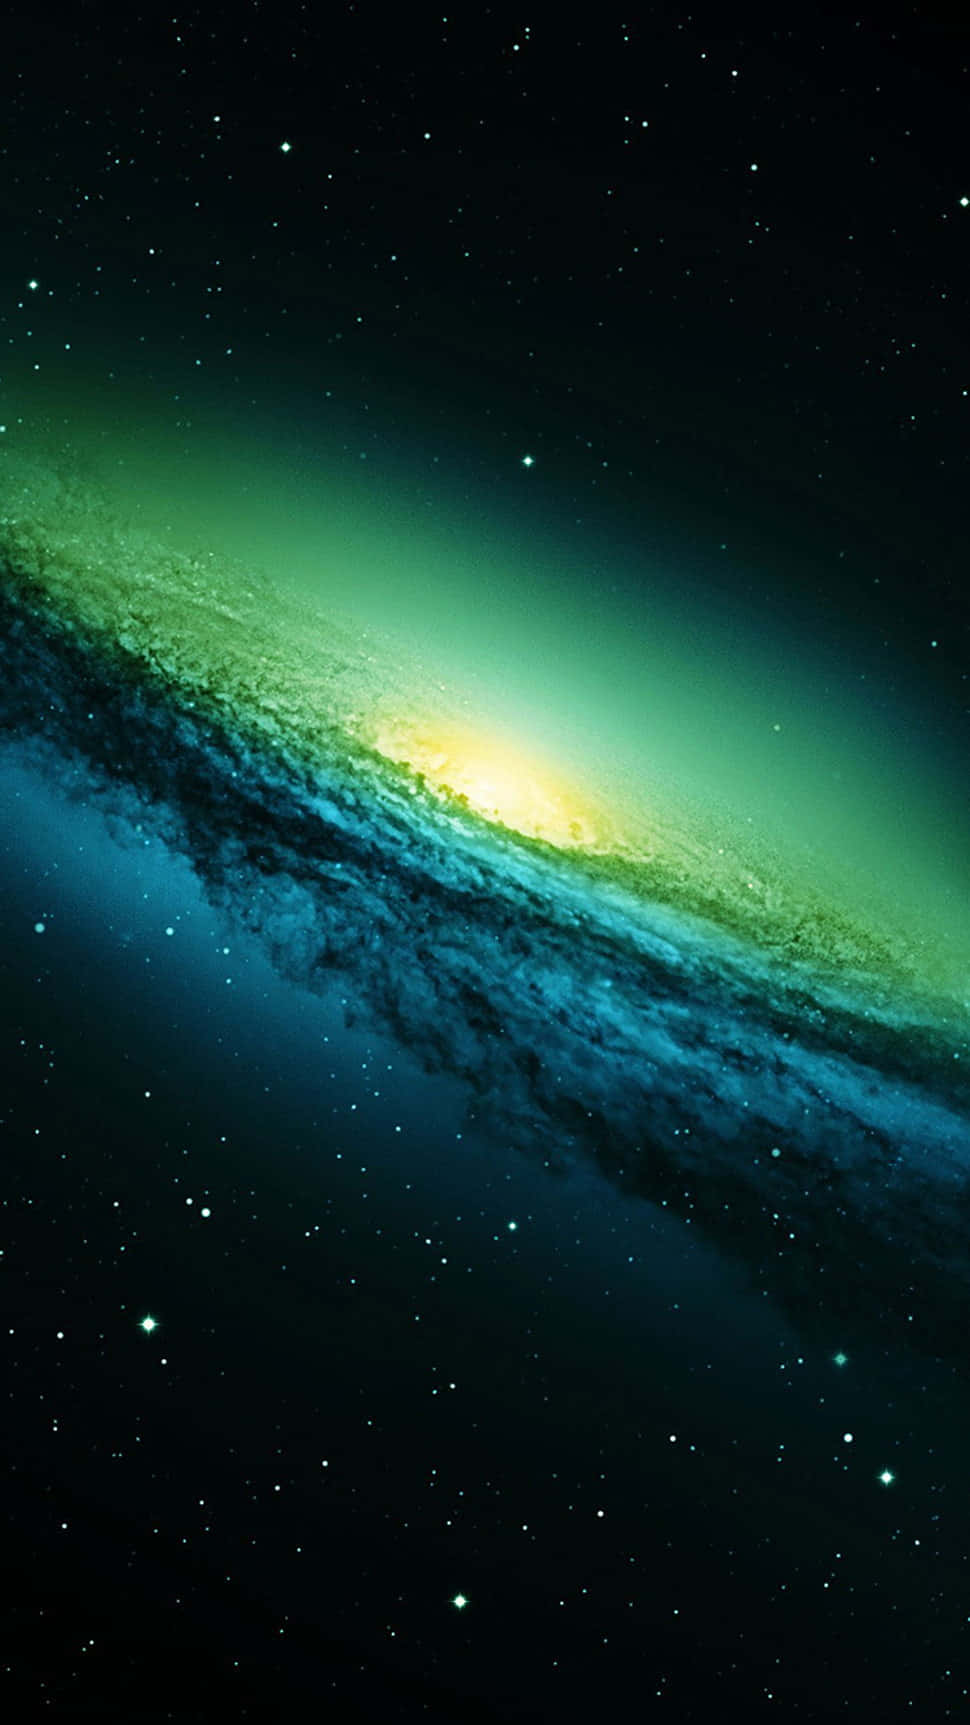 Explore the Green Galaxy Wallpaper